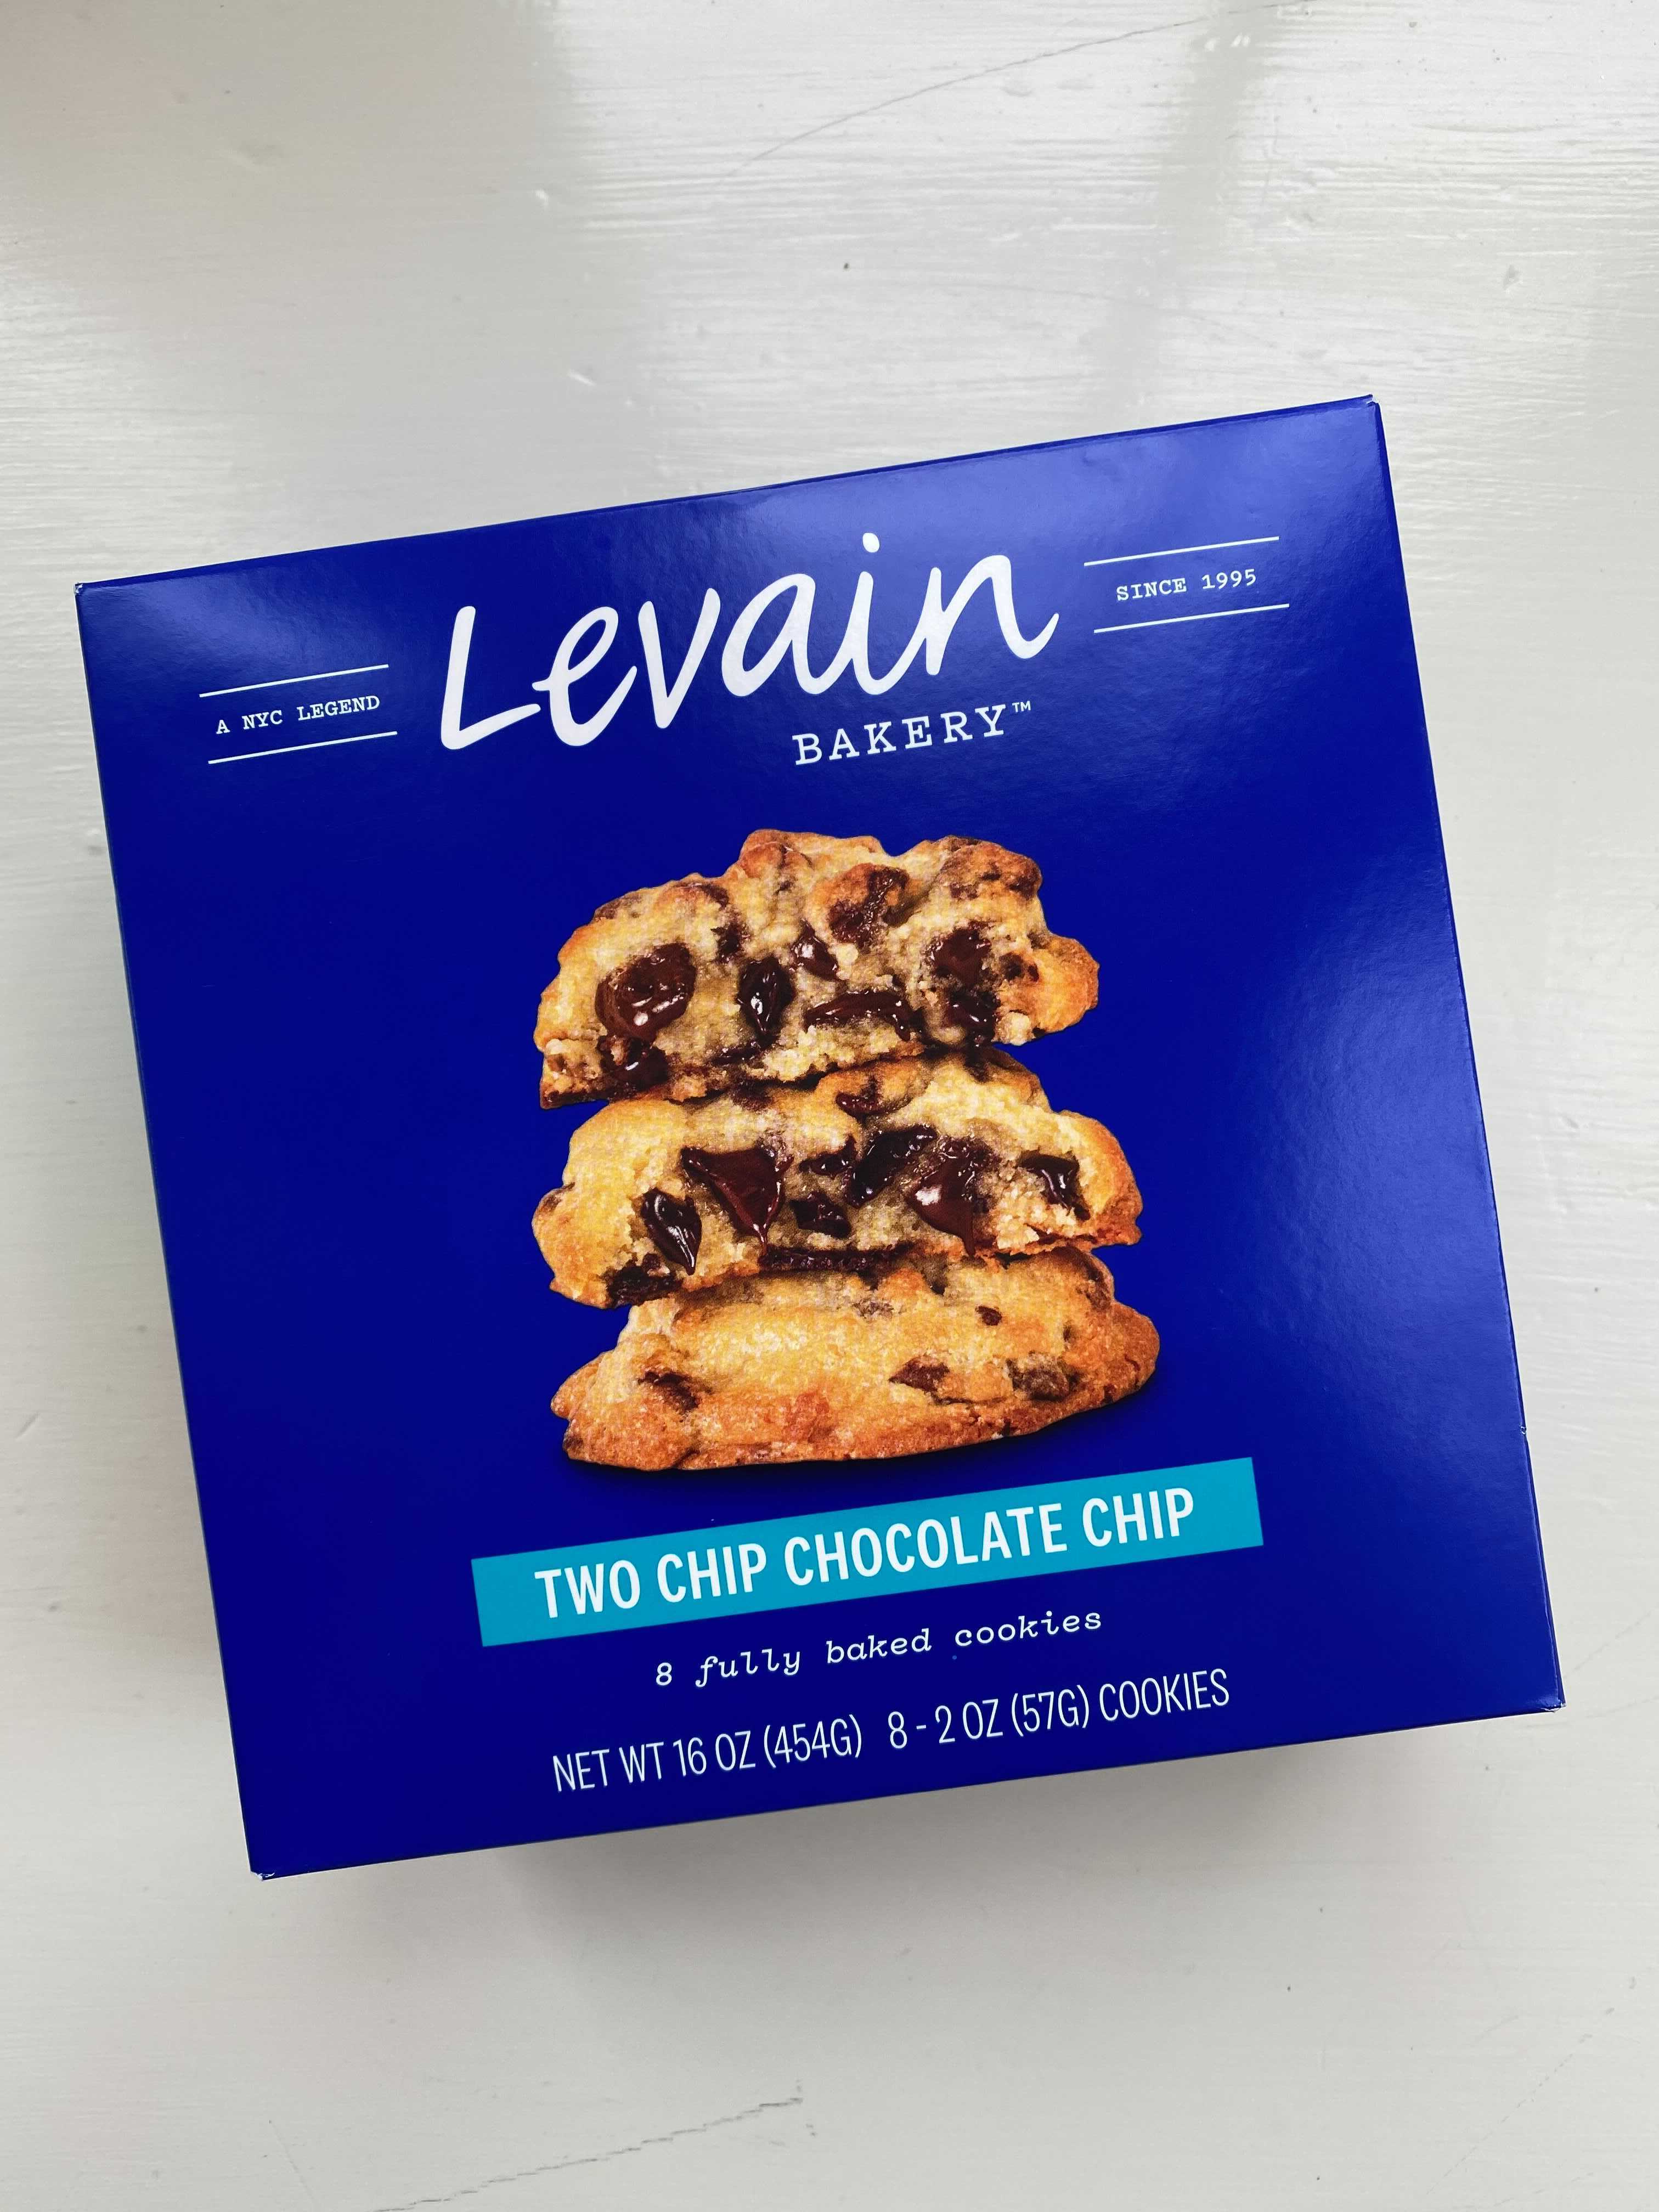 Levain Bakery cookies make their retail debut | Drug Store News